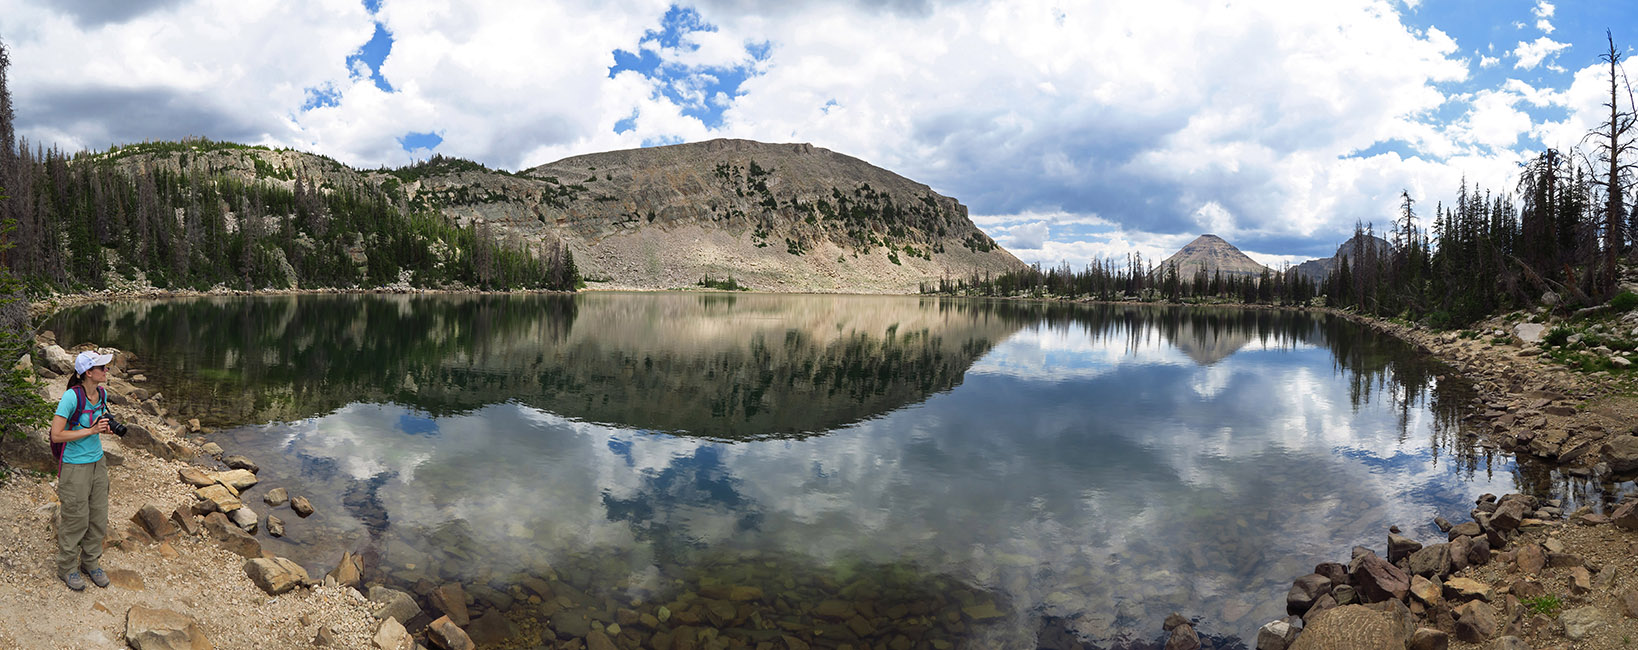 Kamas Lake panorama [Lofty Lake Loop Trail, Uinta-Wasatch-Cache National Forest, Summit County, Utah]